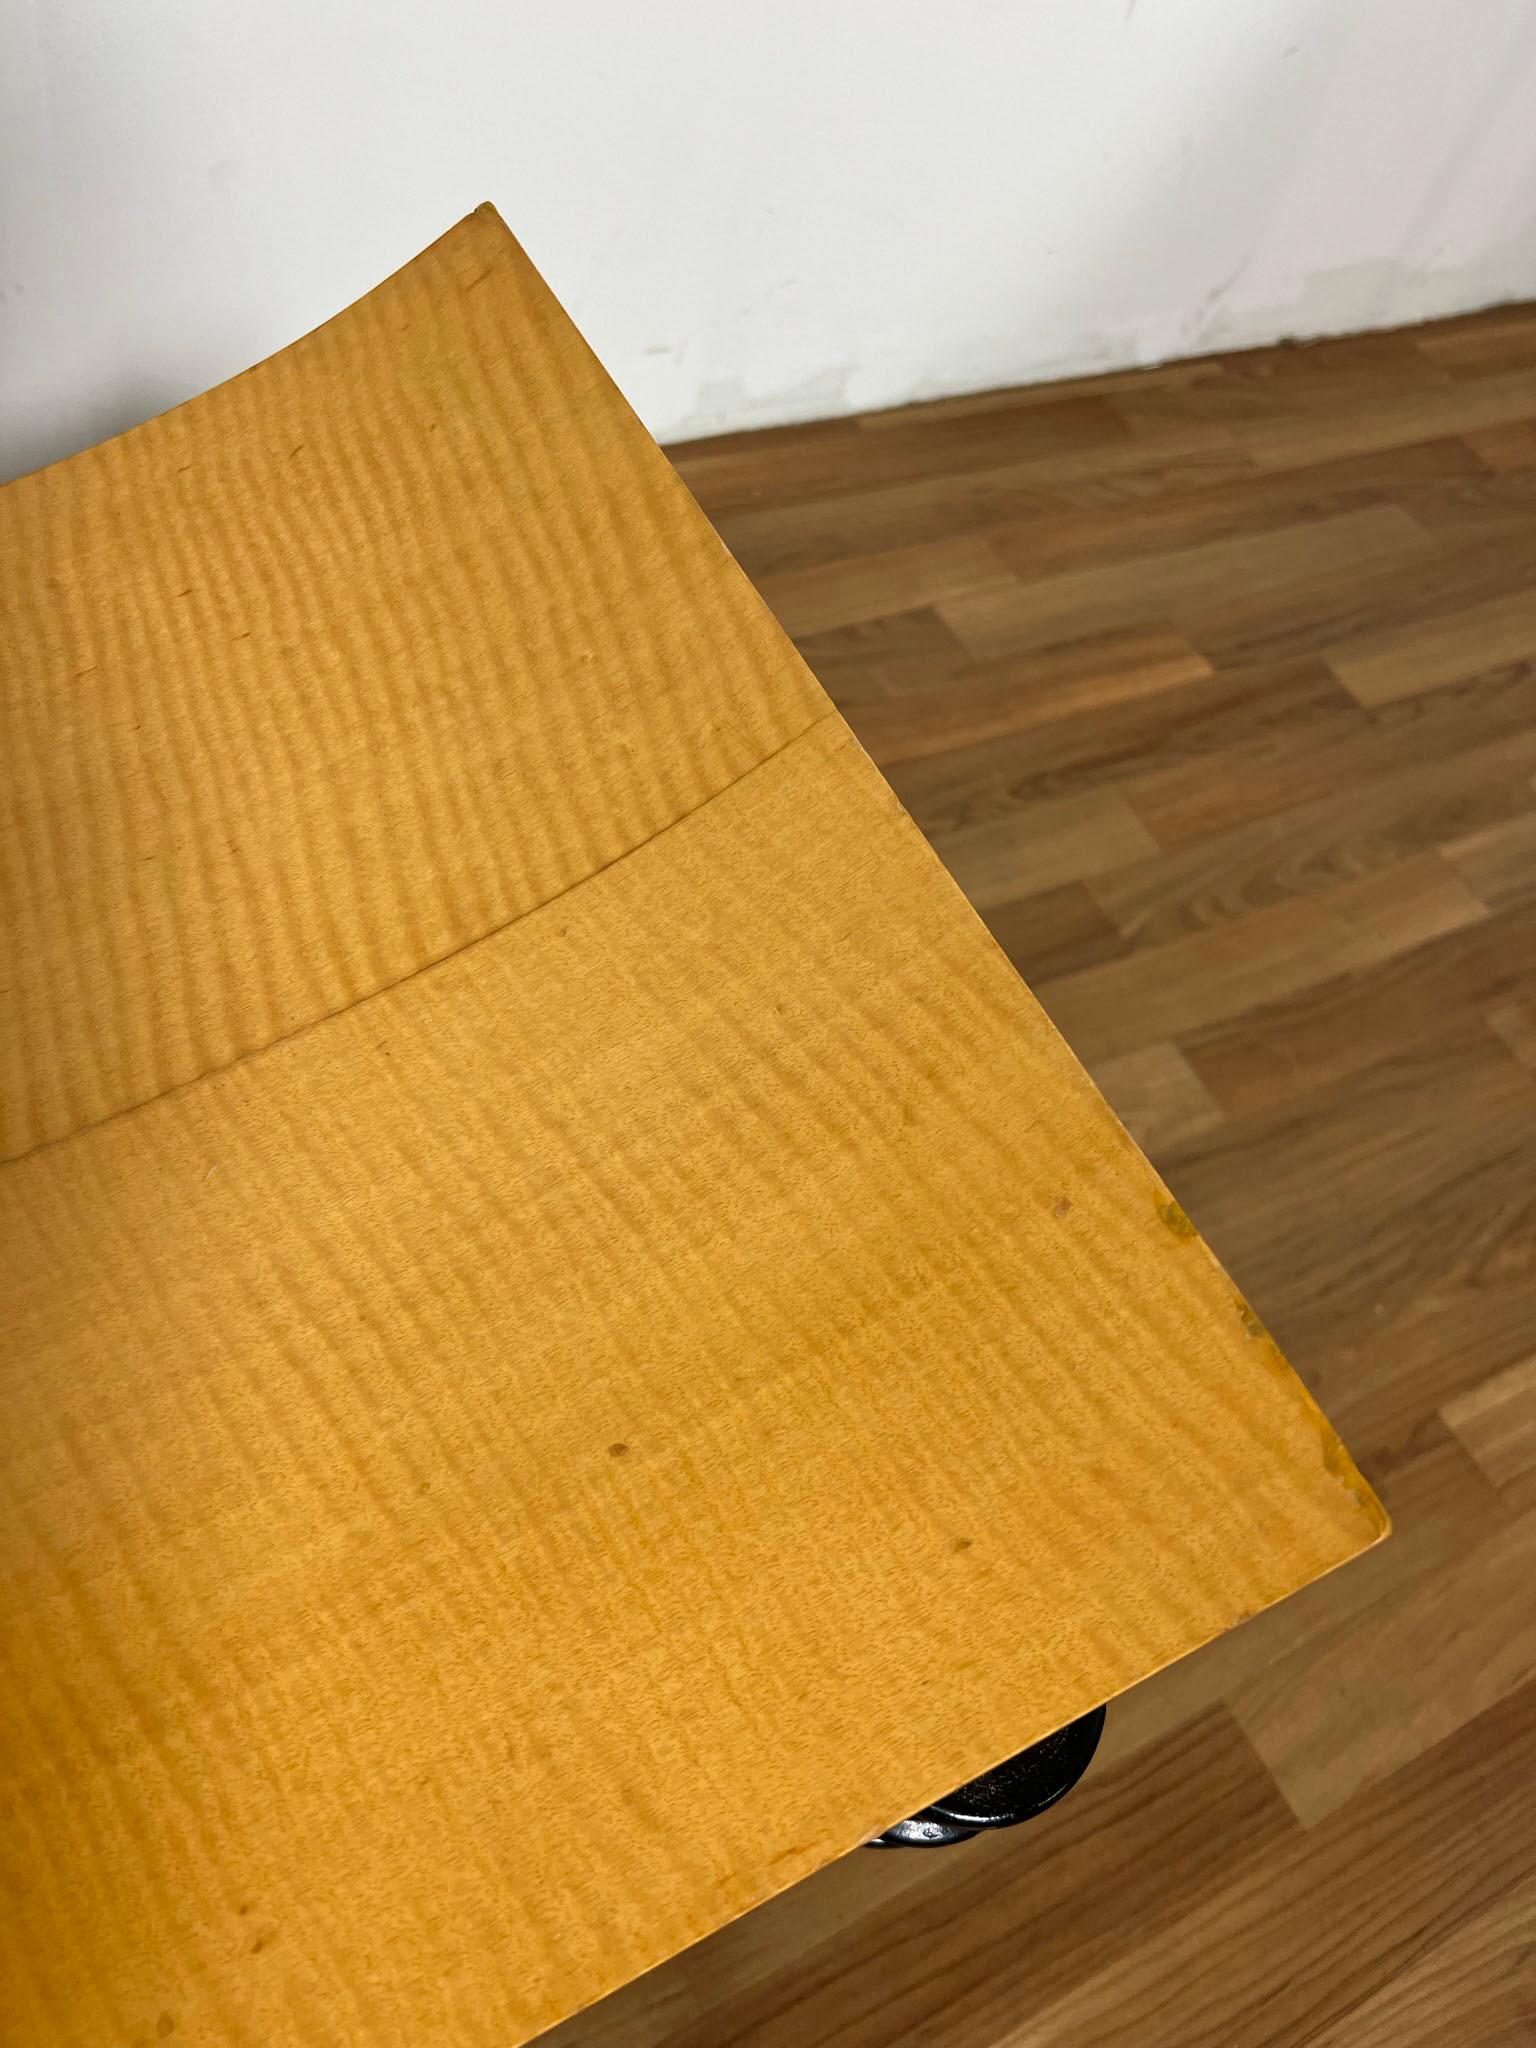 Late 20th Century Tiger Maple Postmodern Studio Craft Bench in the Biedermeier Style